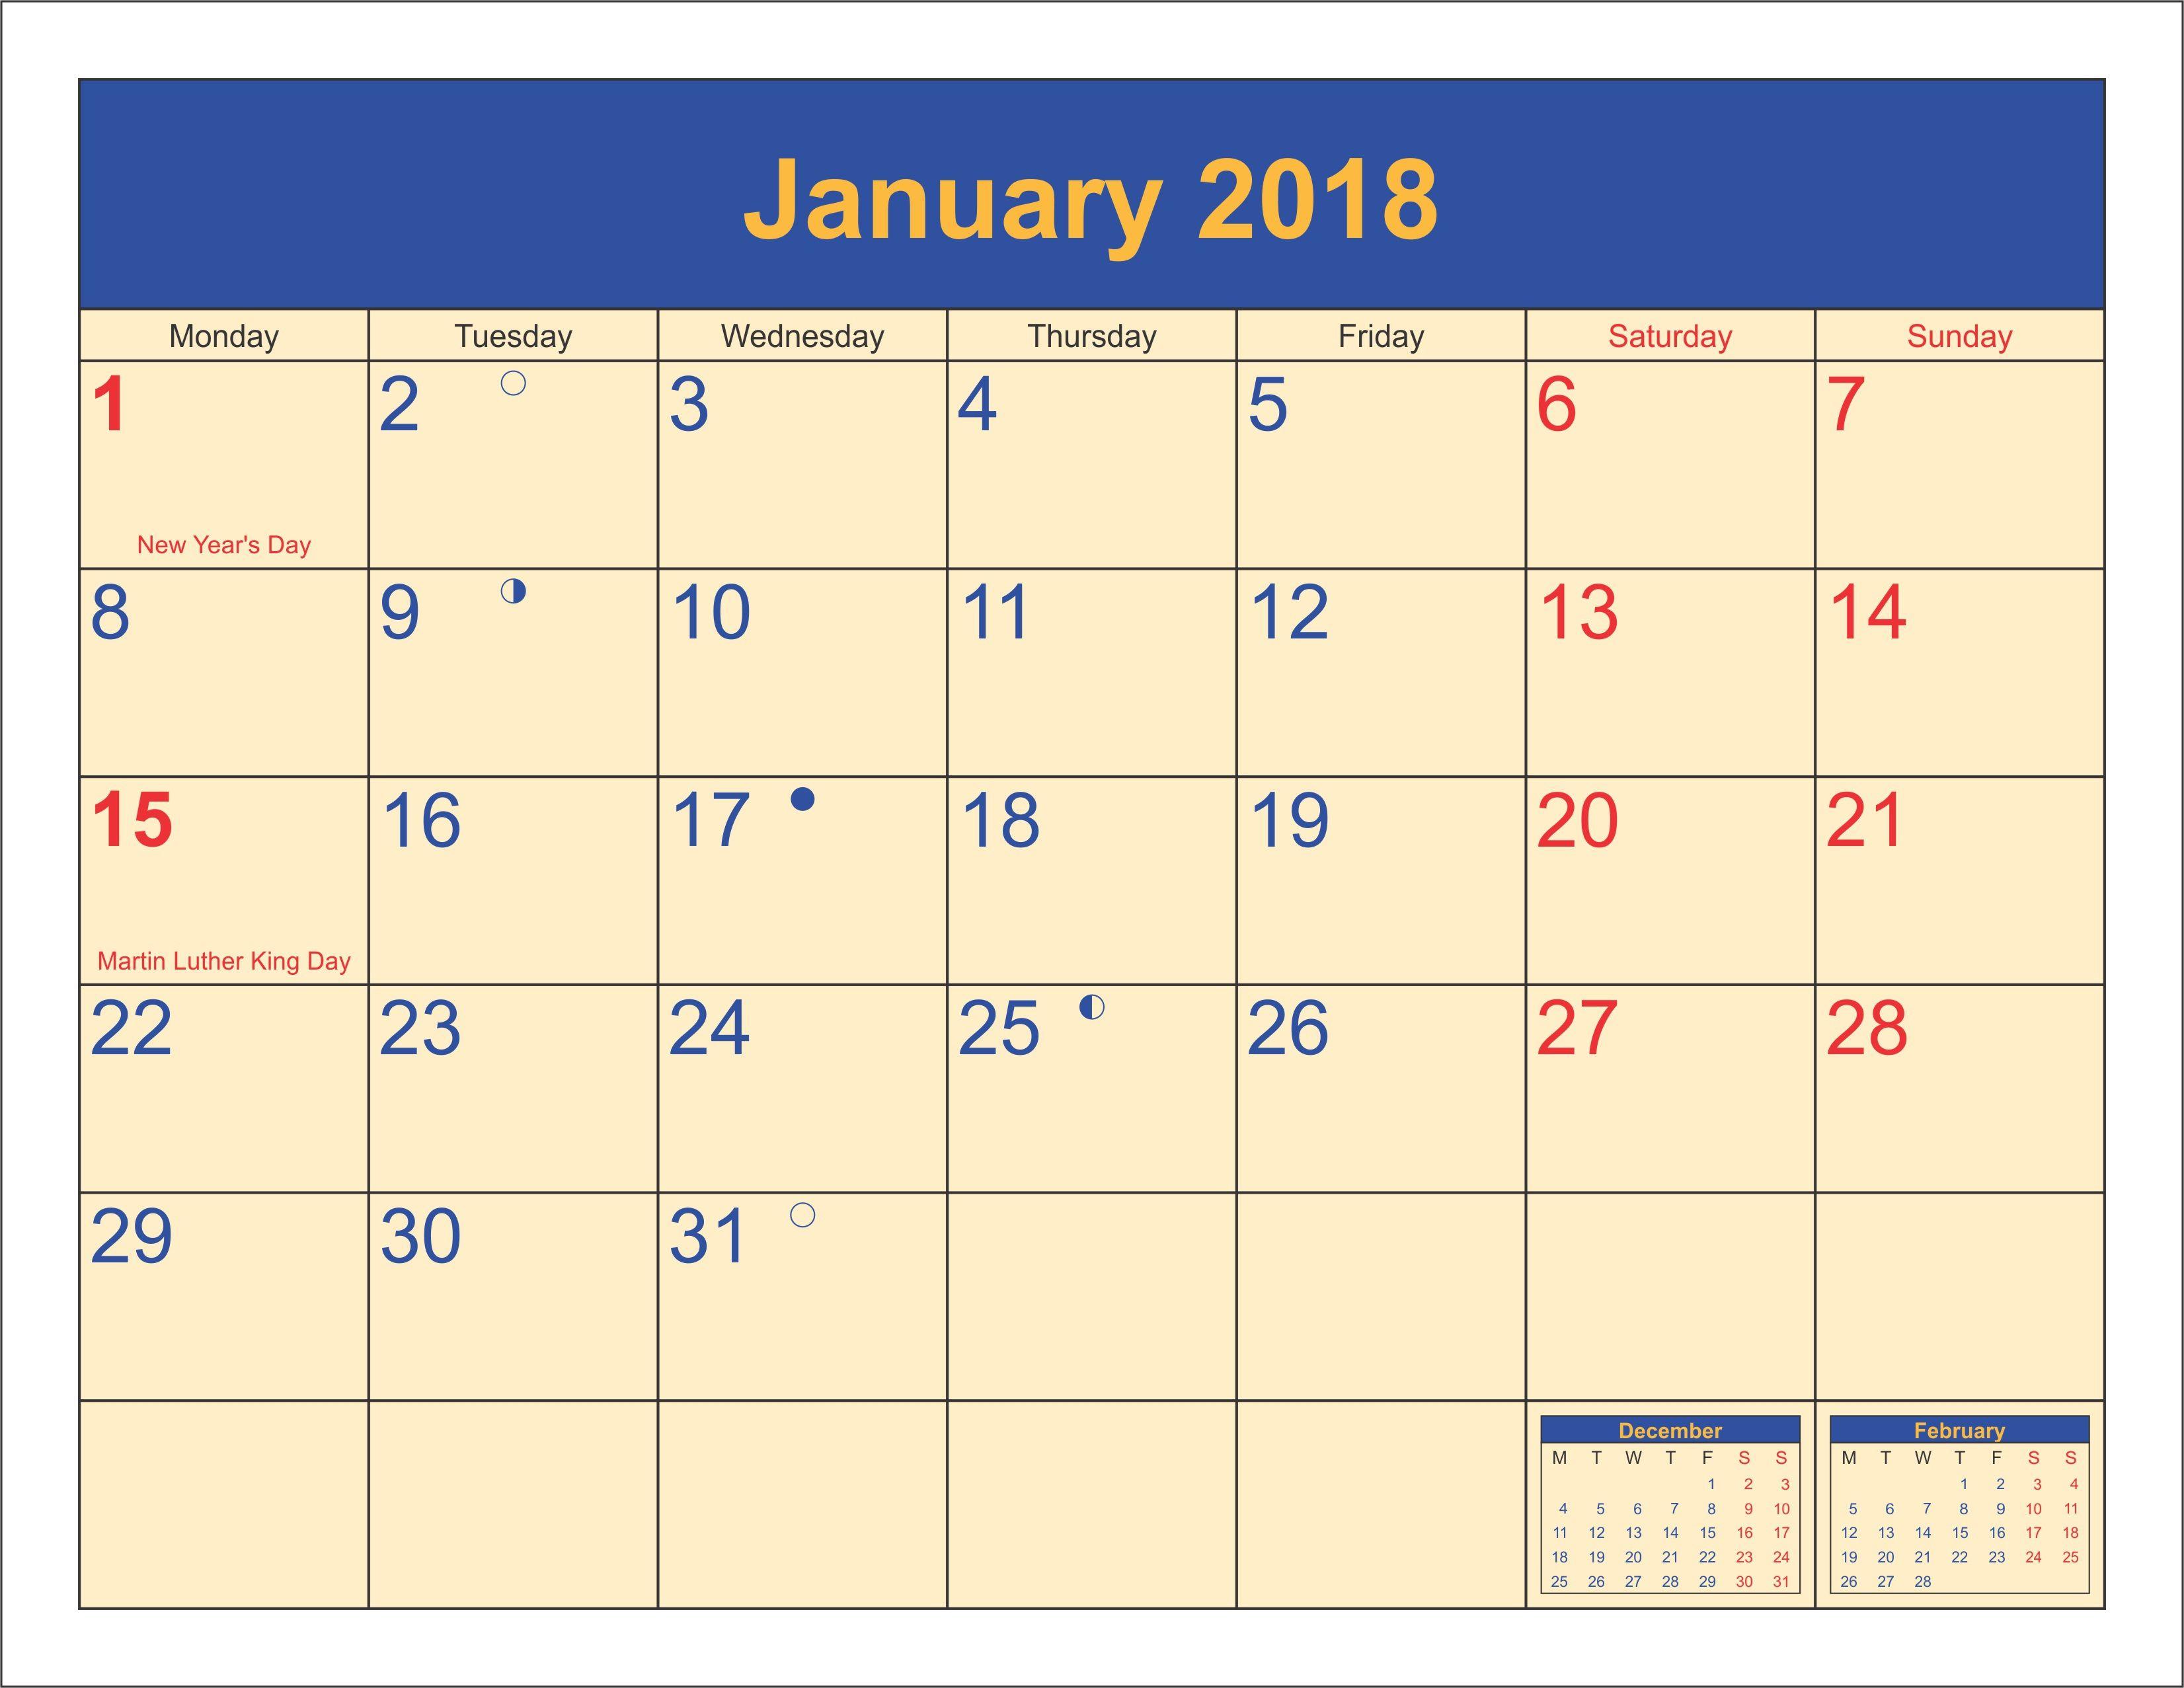 January 2018 Calendar With Holidays Pdf